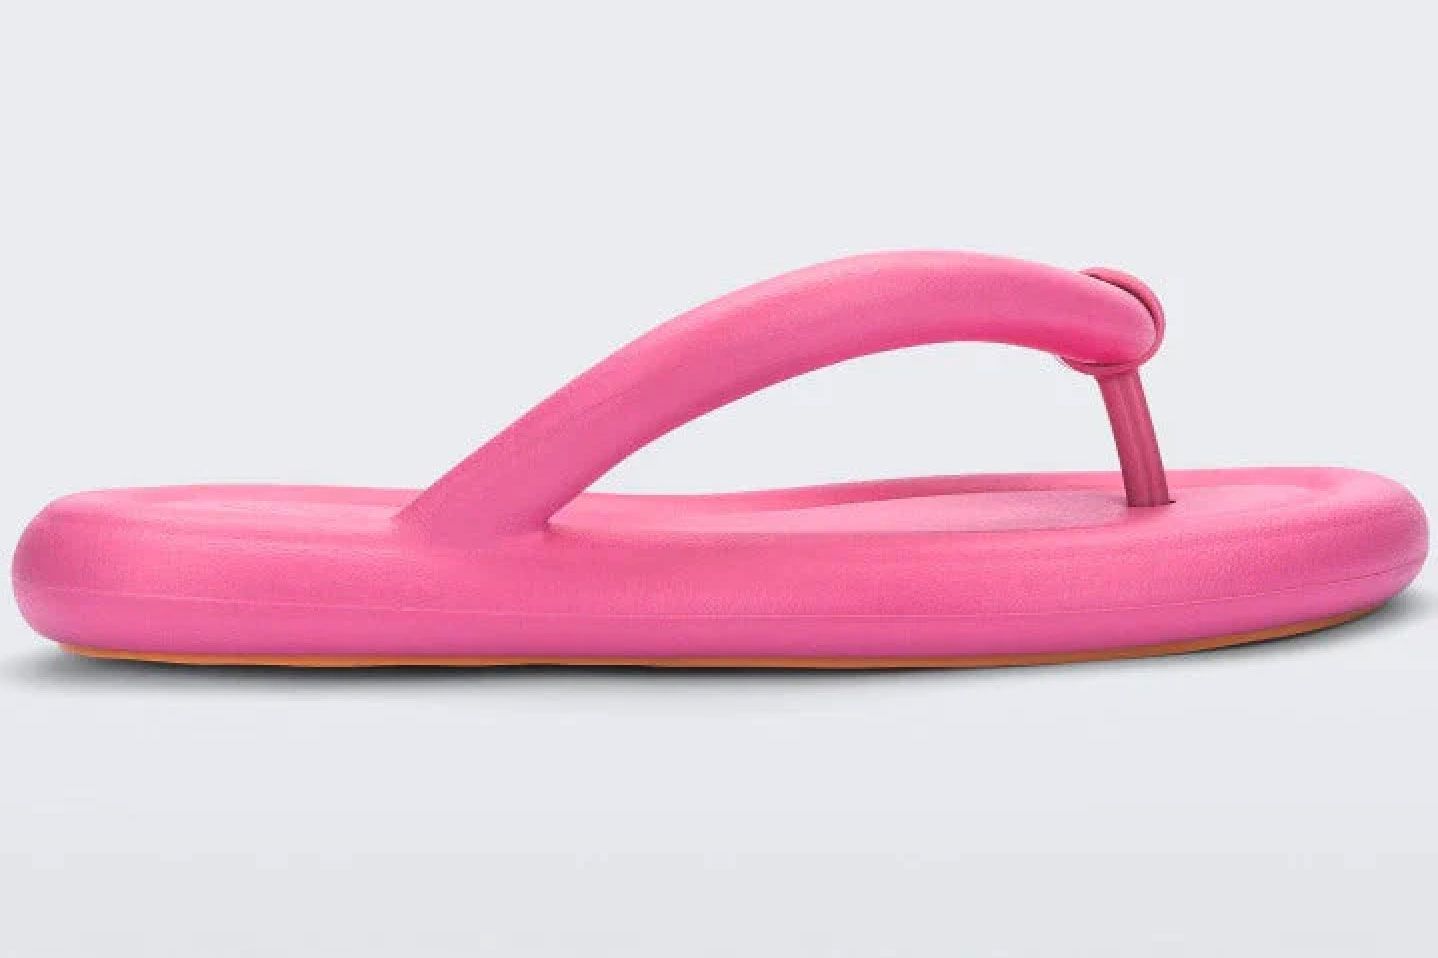 11 Best Flip-Flops for Women